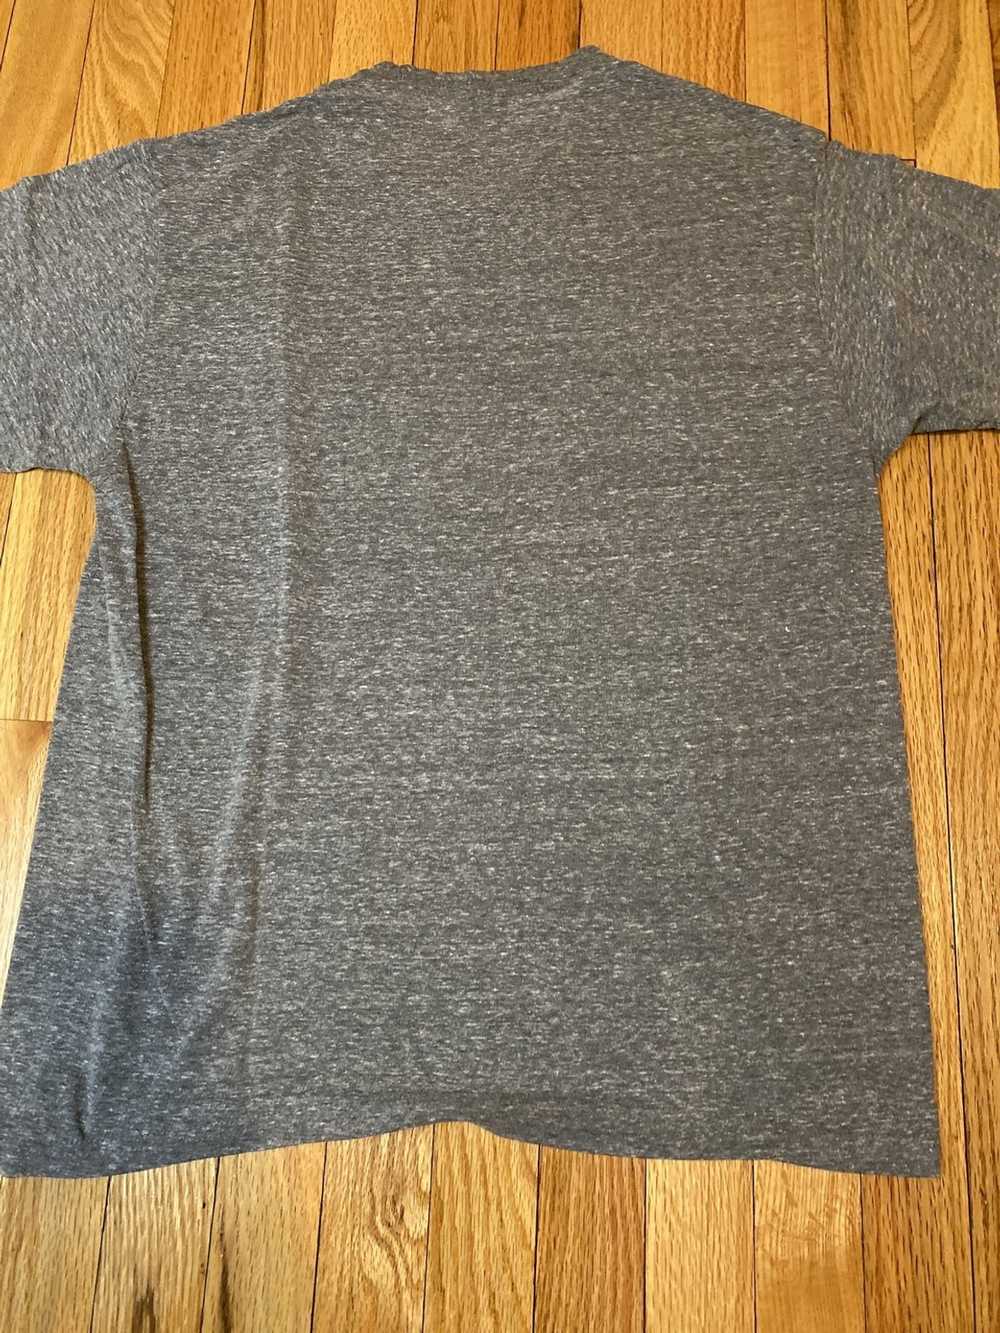 Other × Sportswear Big Bang Theory Shirt - image 4